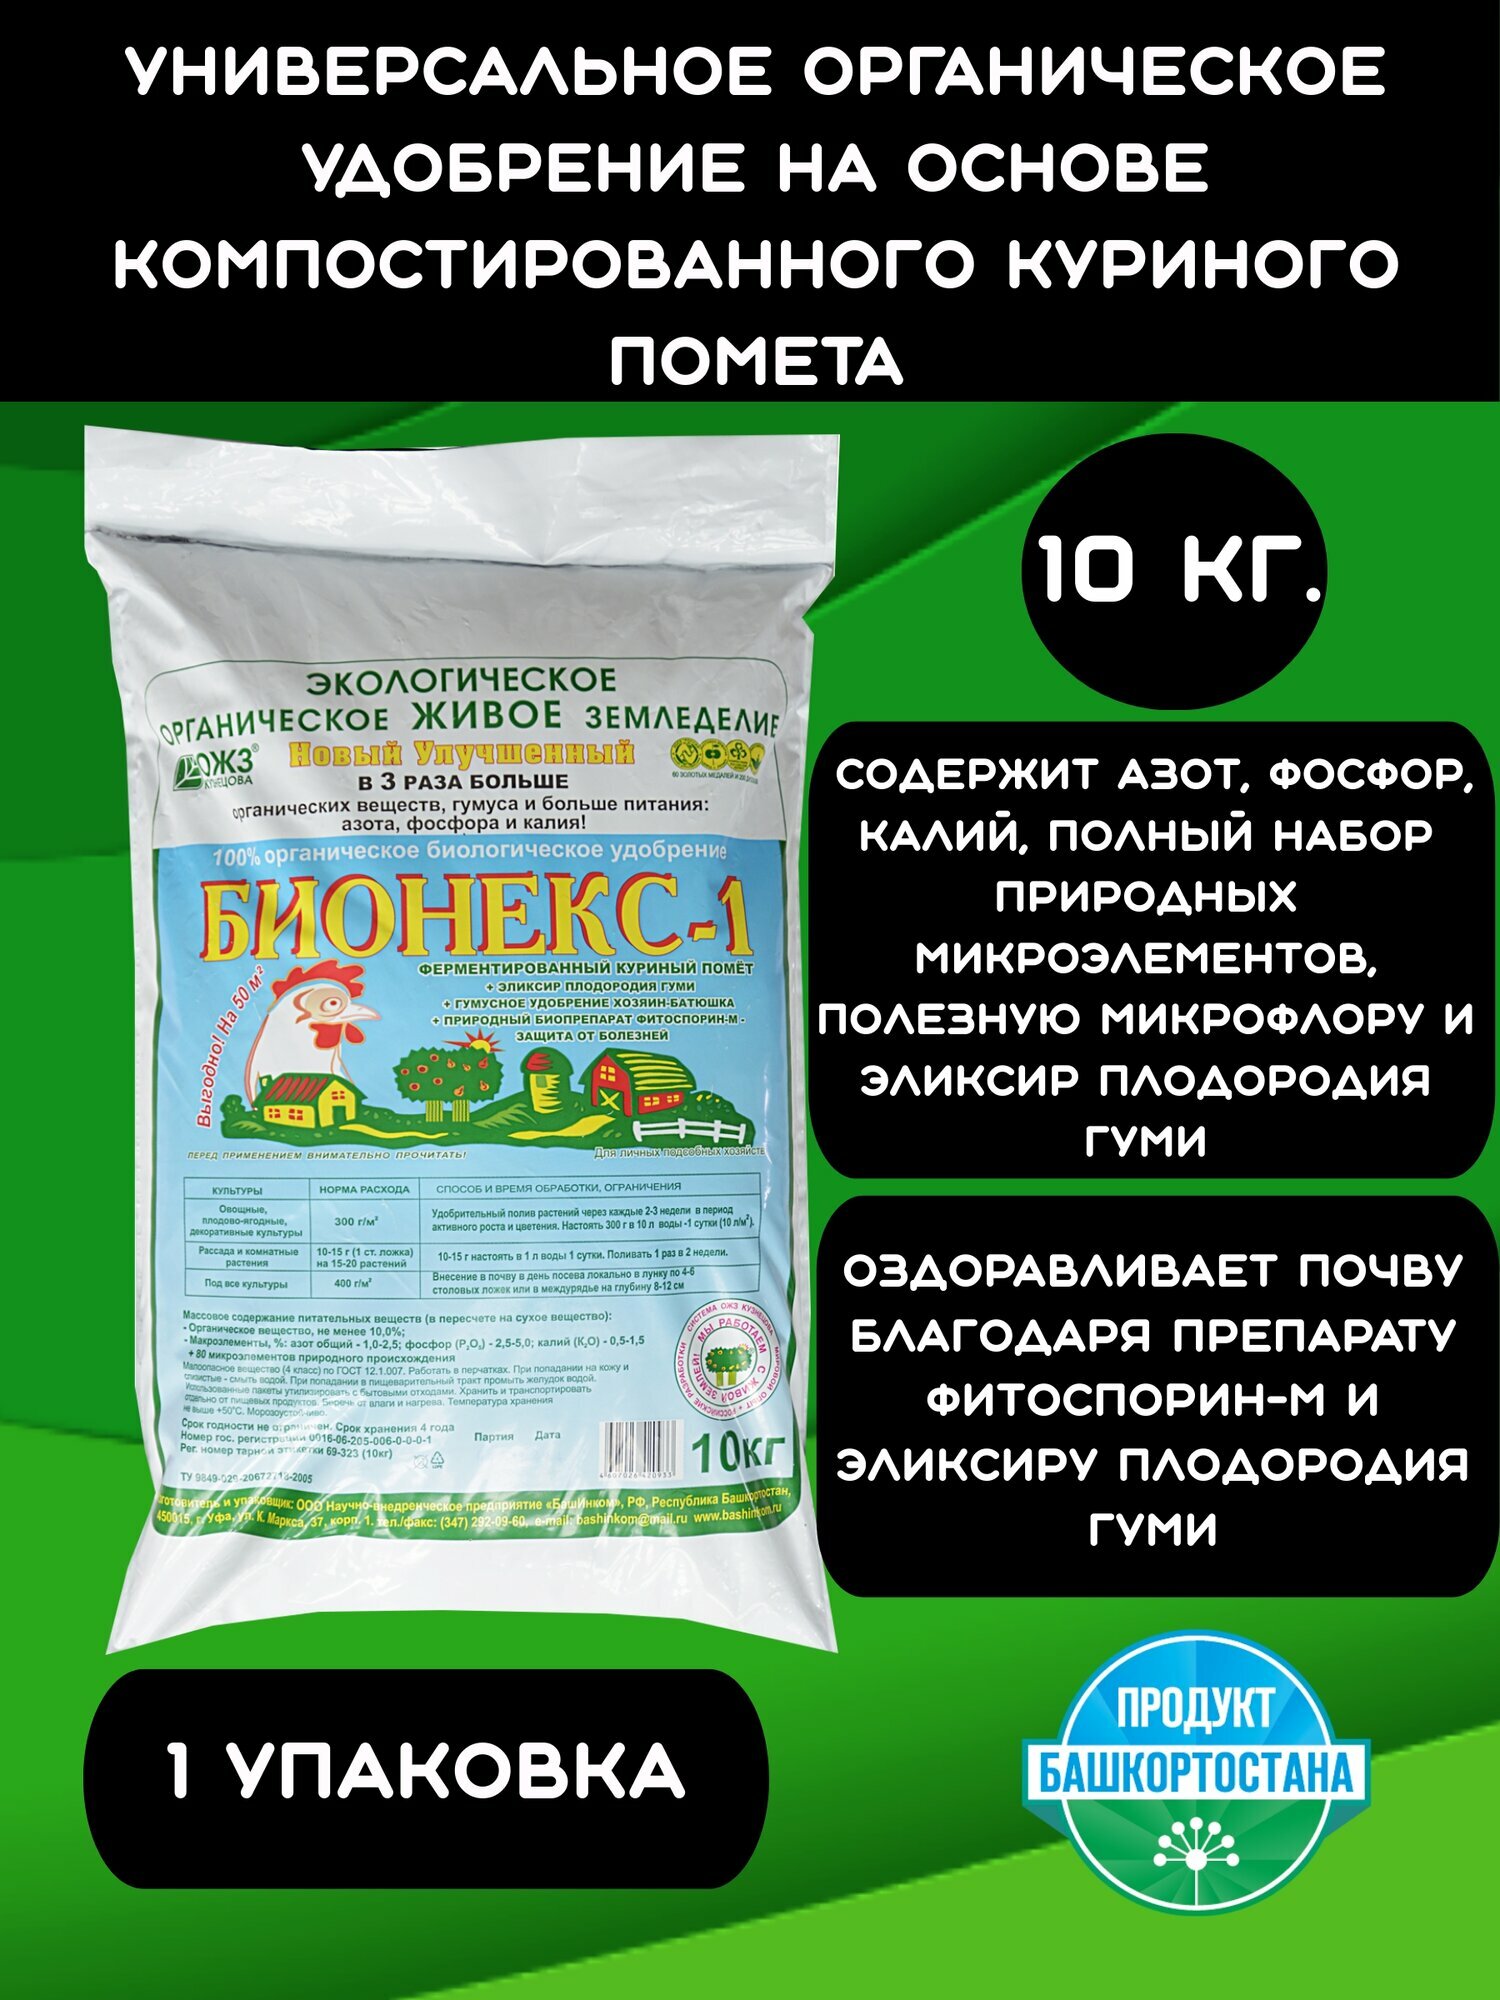 Органическое удобрение на основе куриного помета бионекс 1 'ОЖЗ Кузнецова' 10 кг.